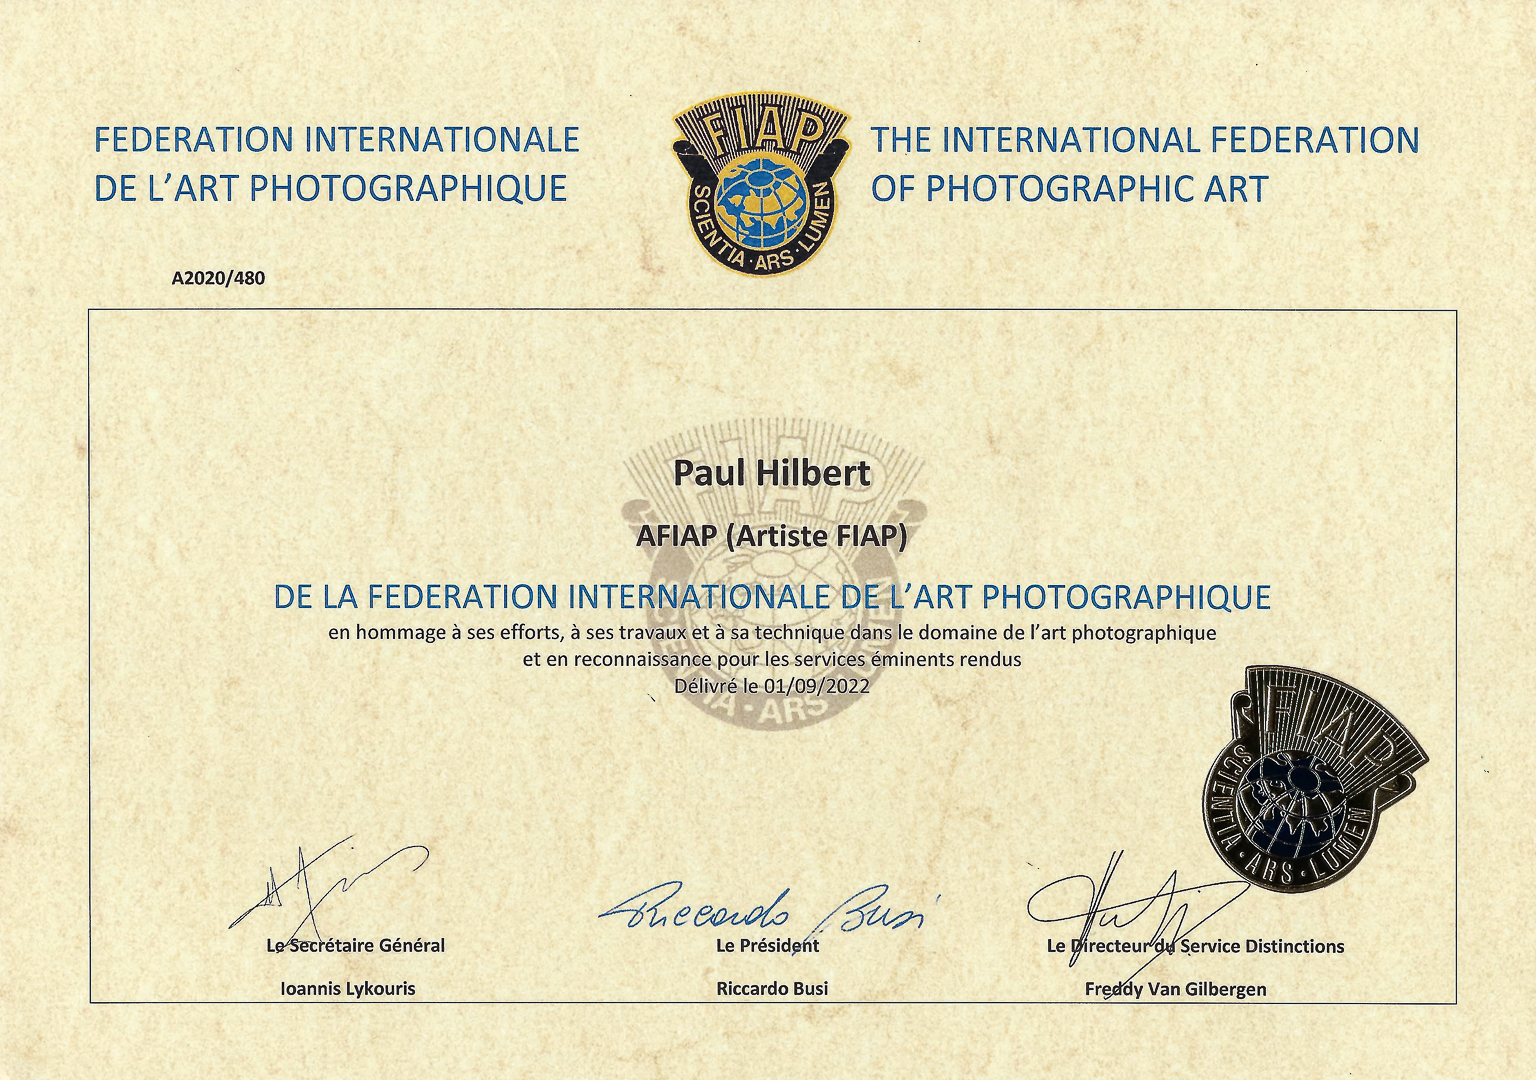 DISTINCTION AFIAP (ARTISTE FIAP); INTERNATIONAL FEDERATION OF PHOTOGRAPHIC ART; Paul Hilbert